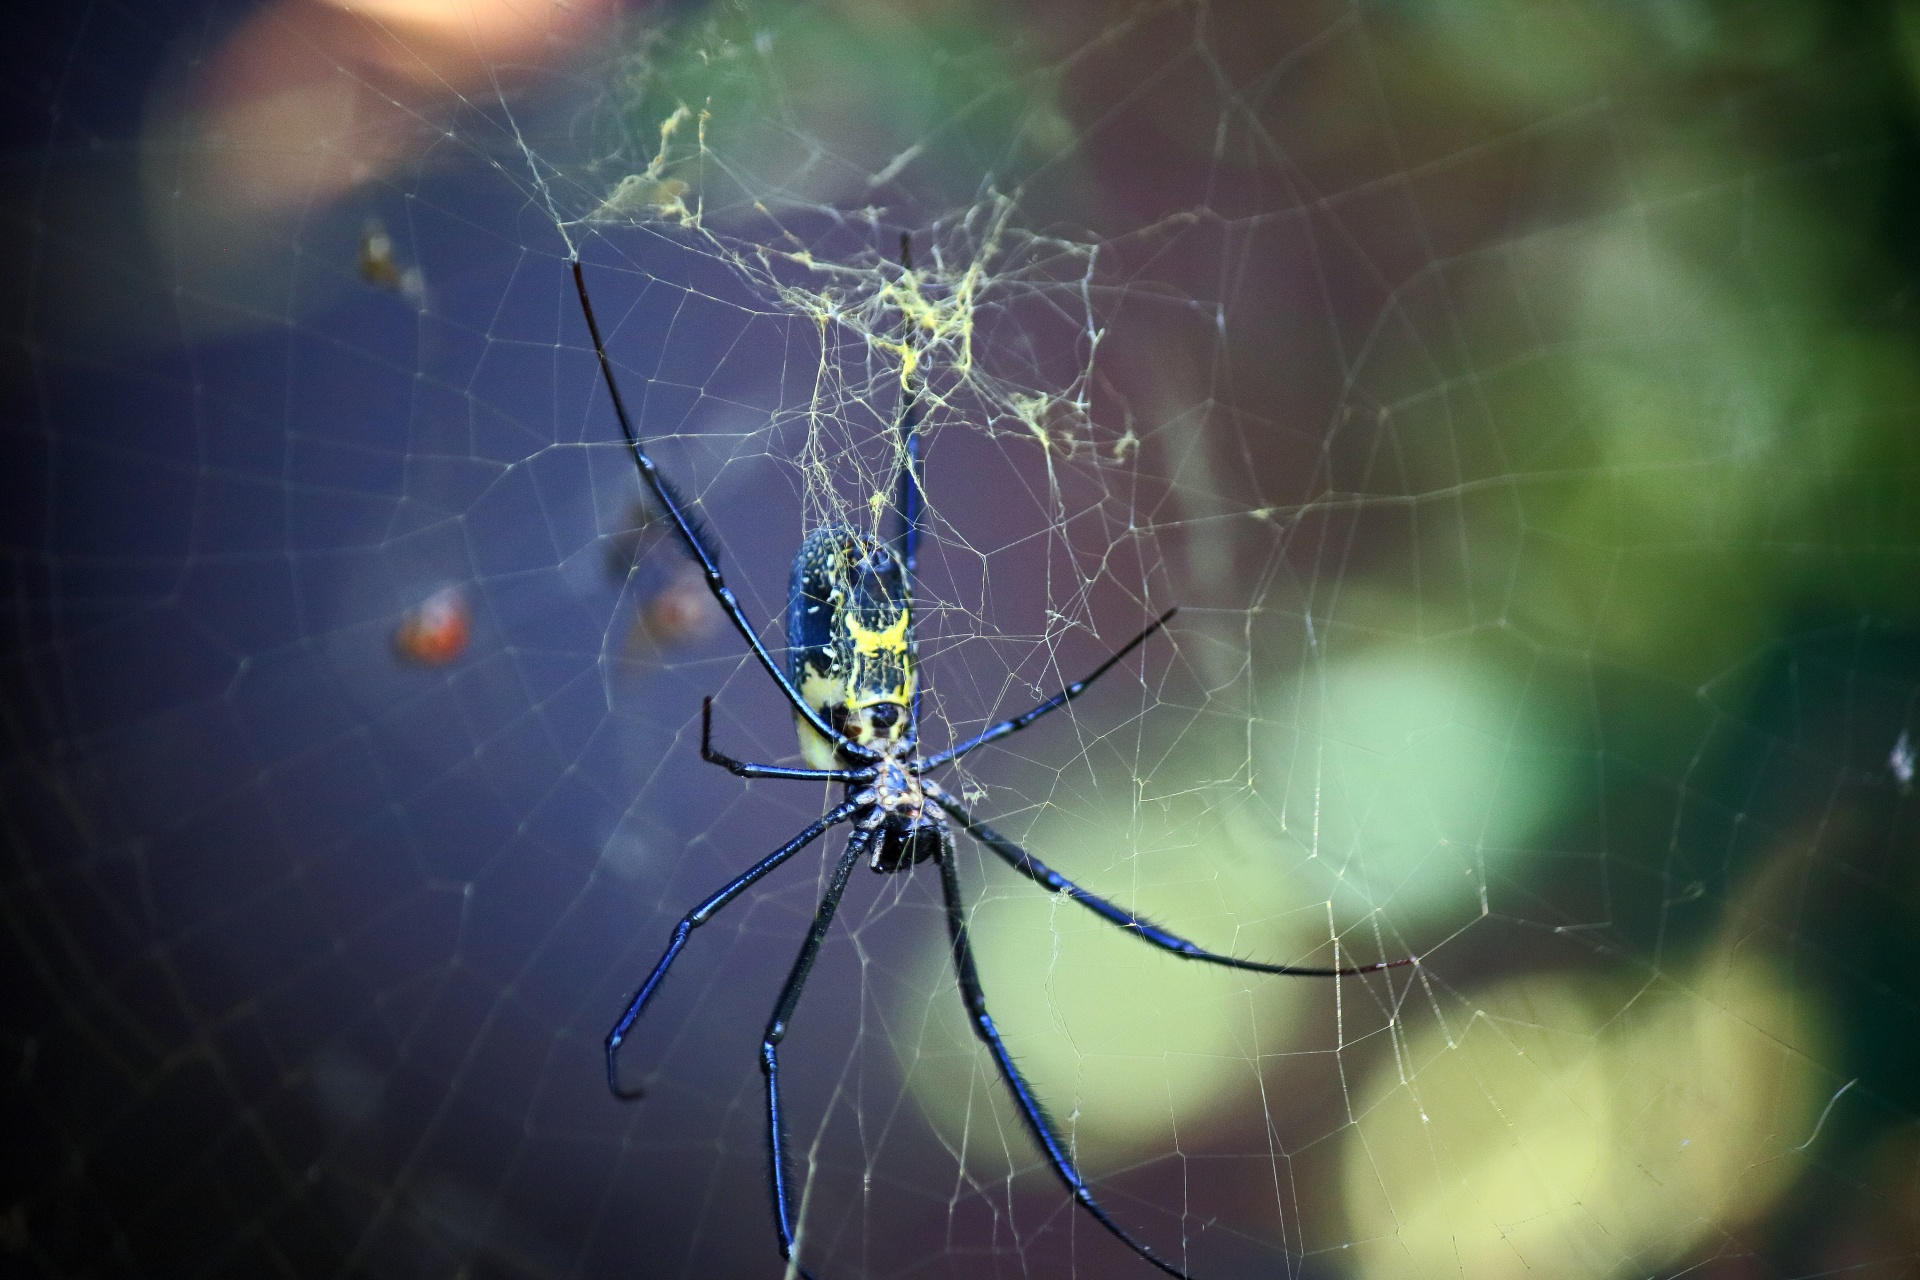 Golden Orb Weaver Spider In Her Web